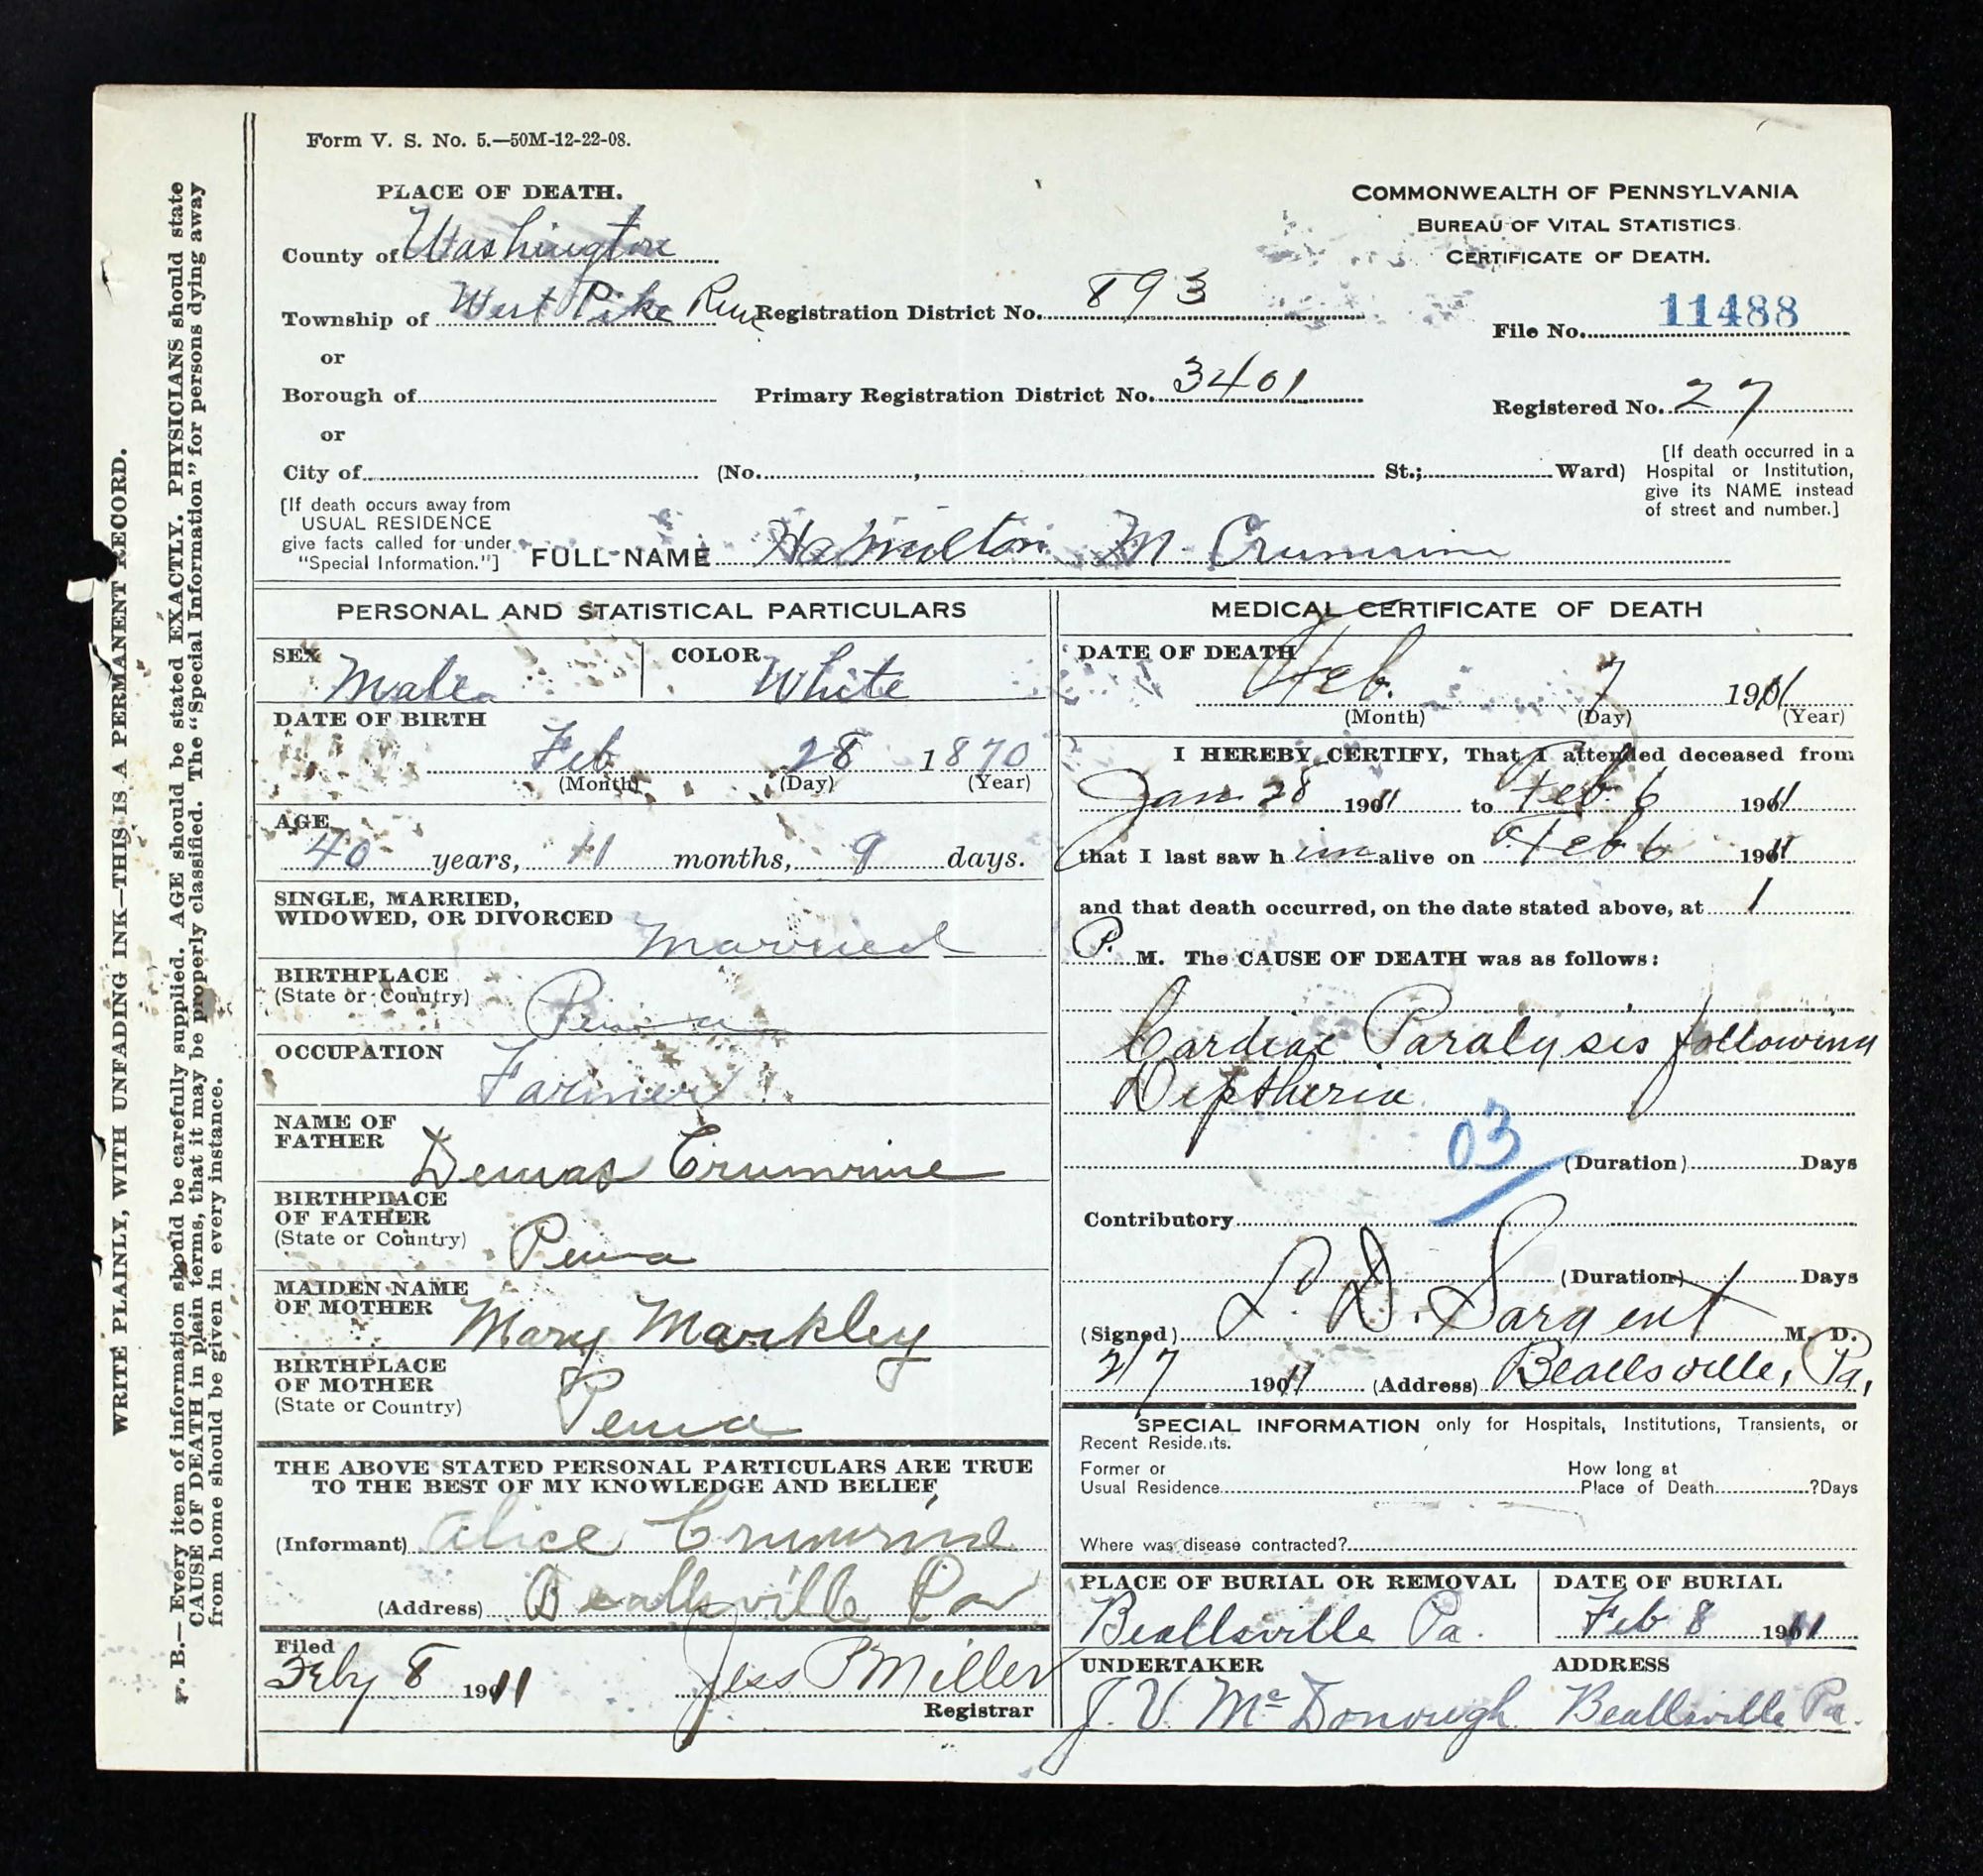 Hamilton M. Crumrine death certificate